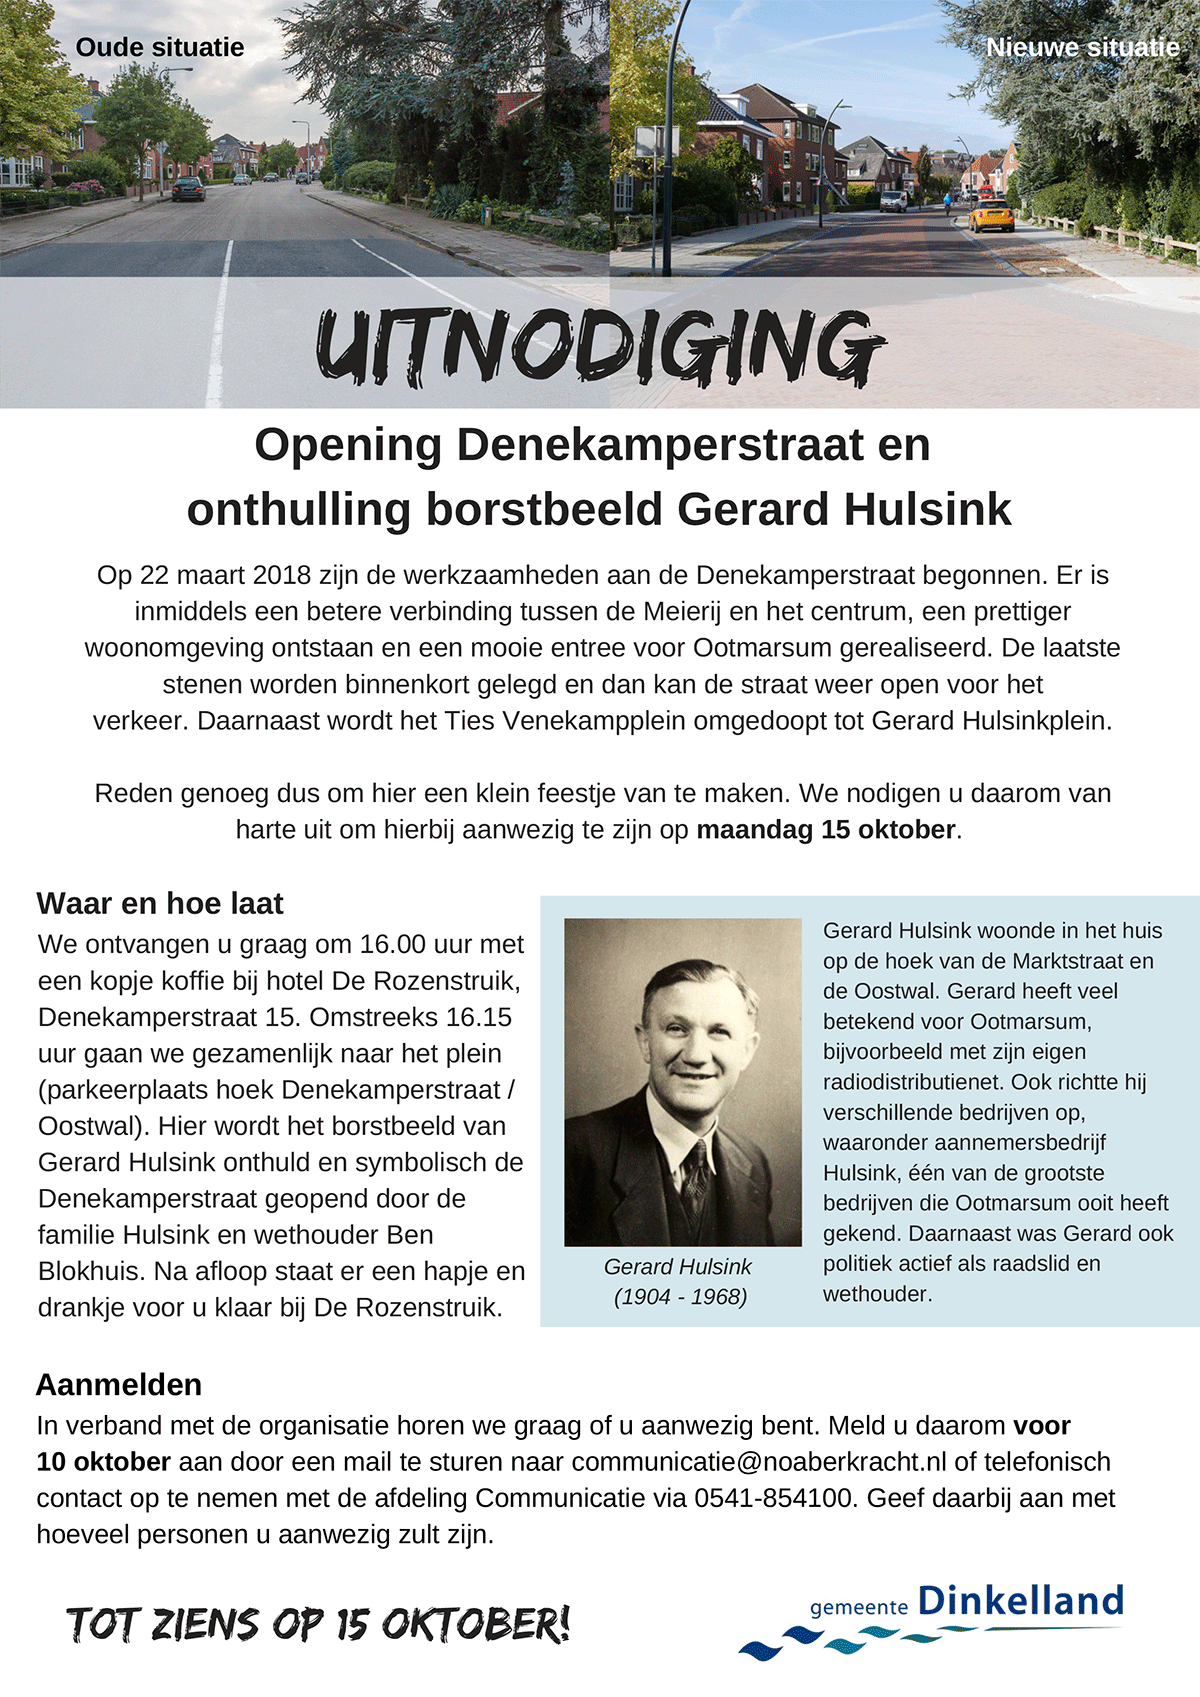 Opening-Denekamperstraat-news-image.gif